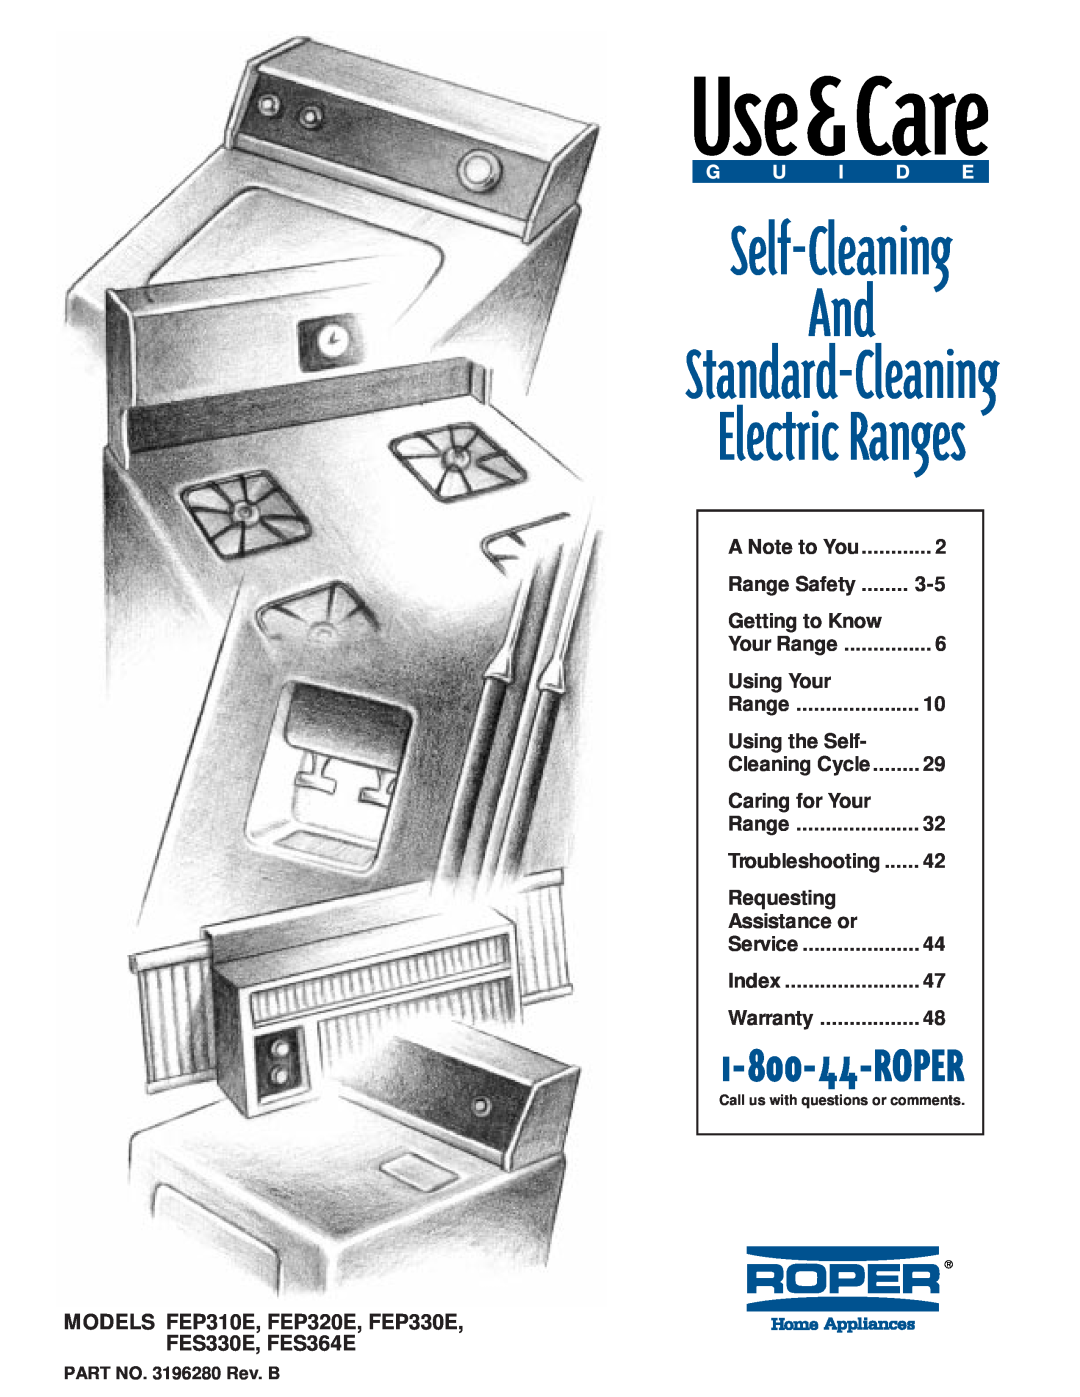 Whirlpool warranty MODELS FEP310E, FEP320E, FEP330E FES330E, FES364E, Use&Care, And Standard-Cleaning, Self-Cleaning 